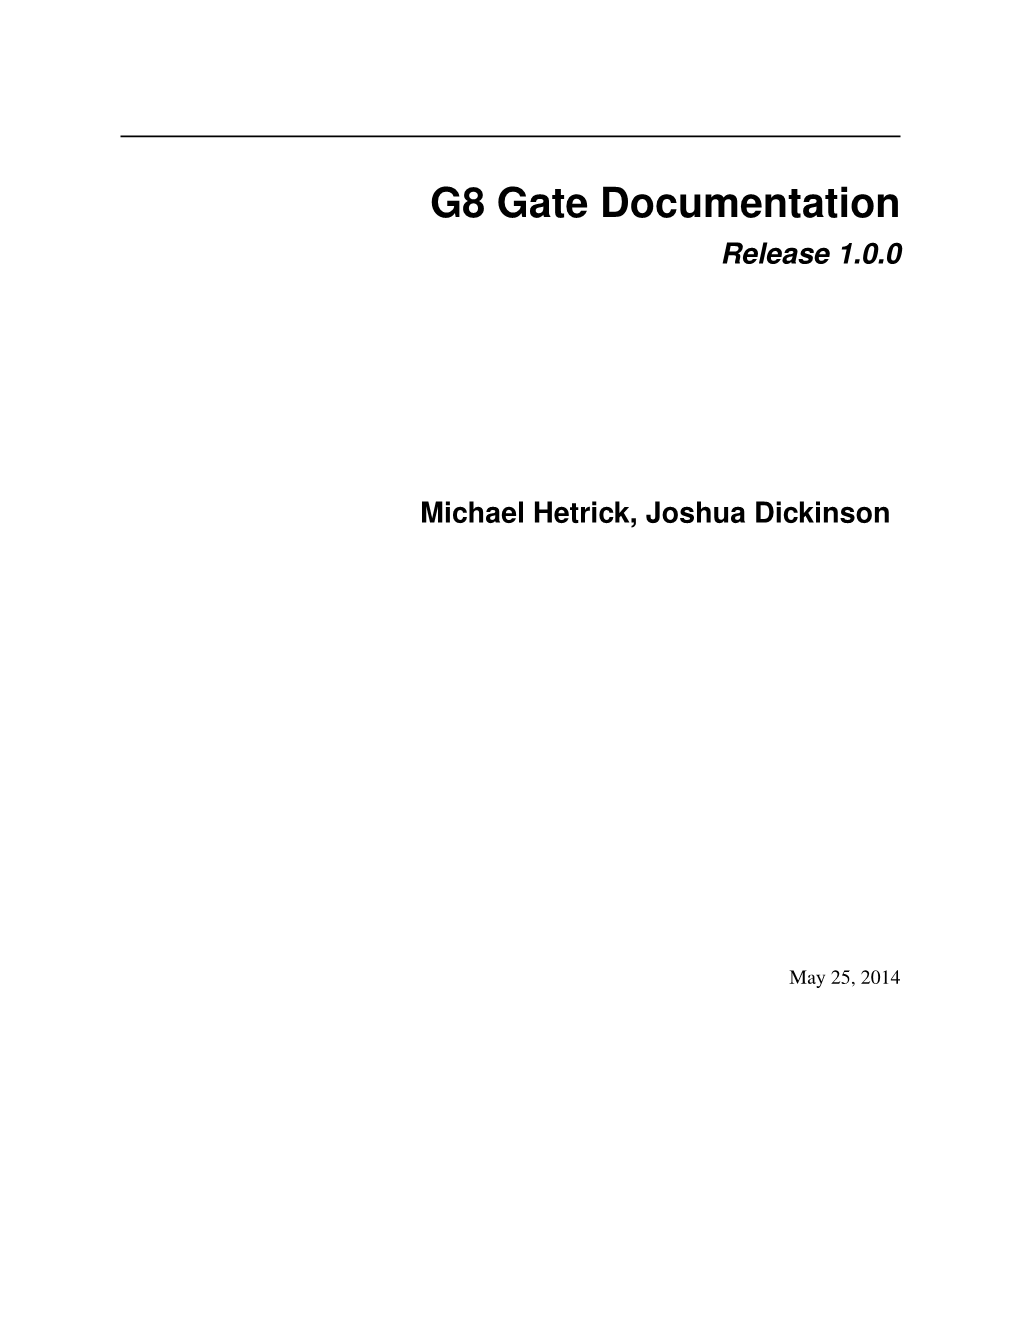 G8 Gate Documentation Release 1.0.0